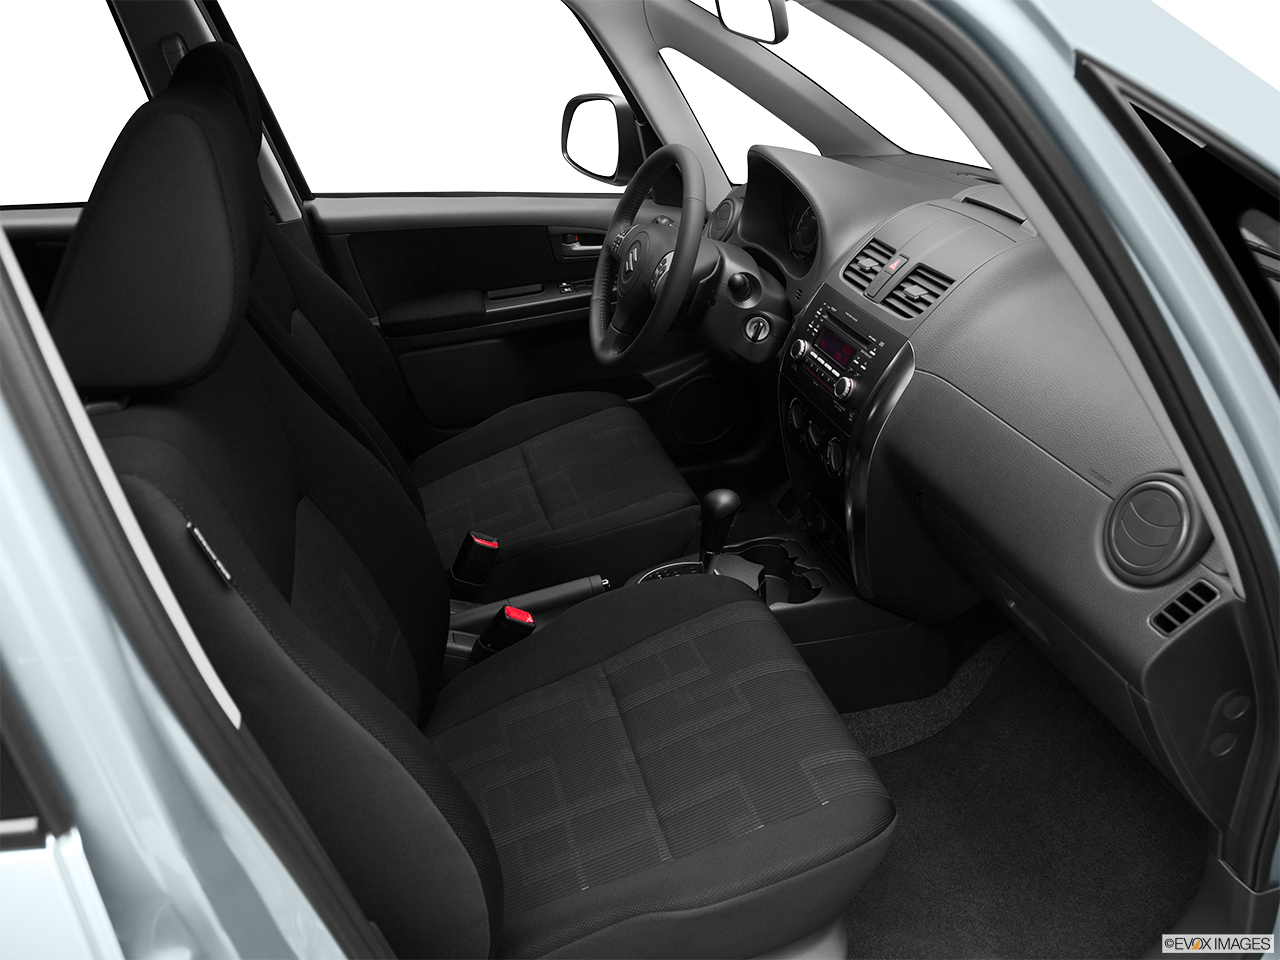 2011 Suzuki SX4 Sportback Technology Passenger seat. 